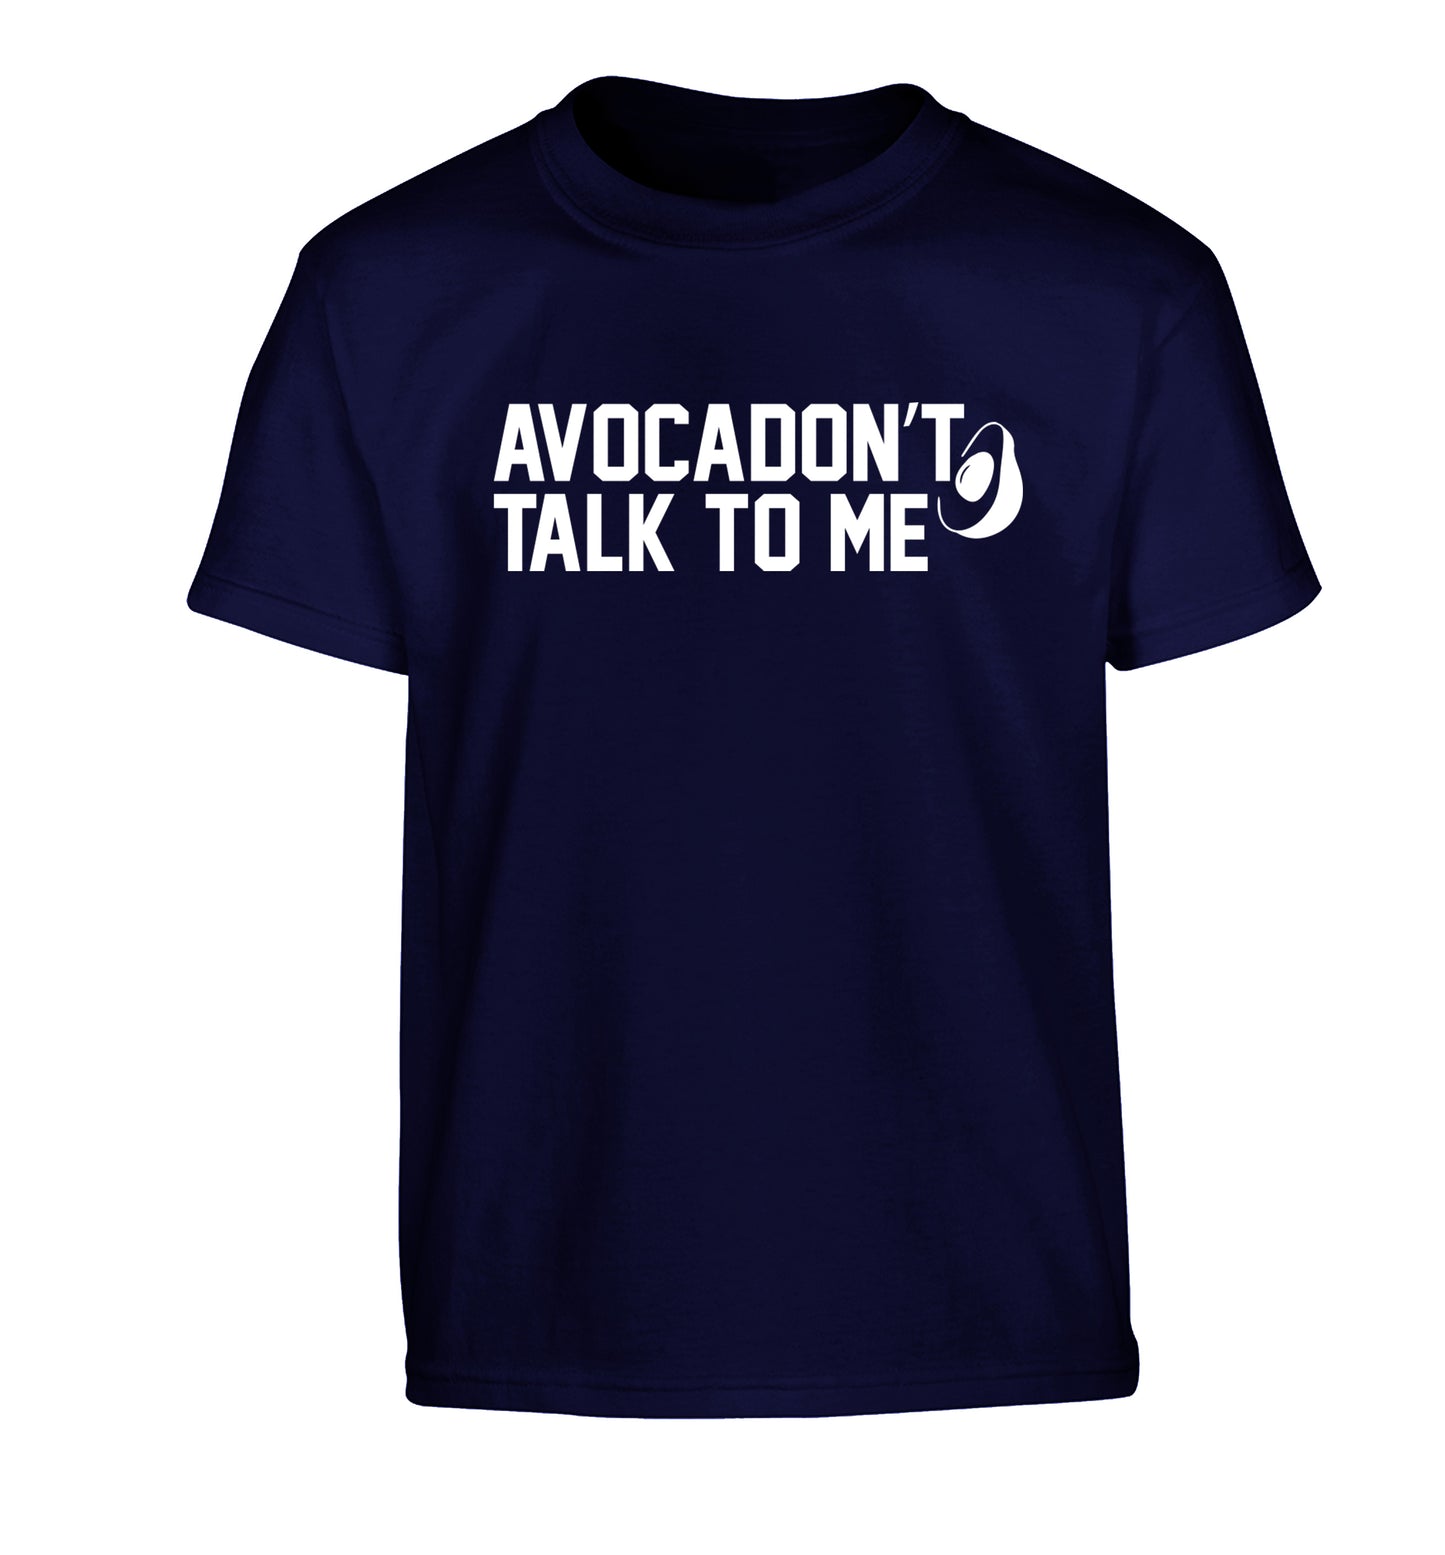 Avocadon't talk to me Children's navy Tshirt 12-14 Years